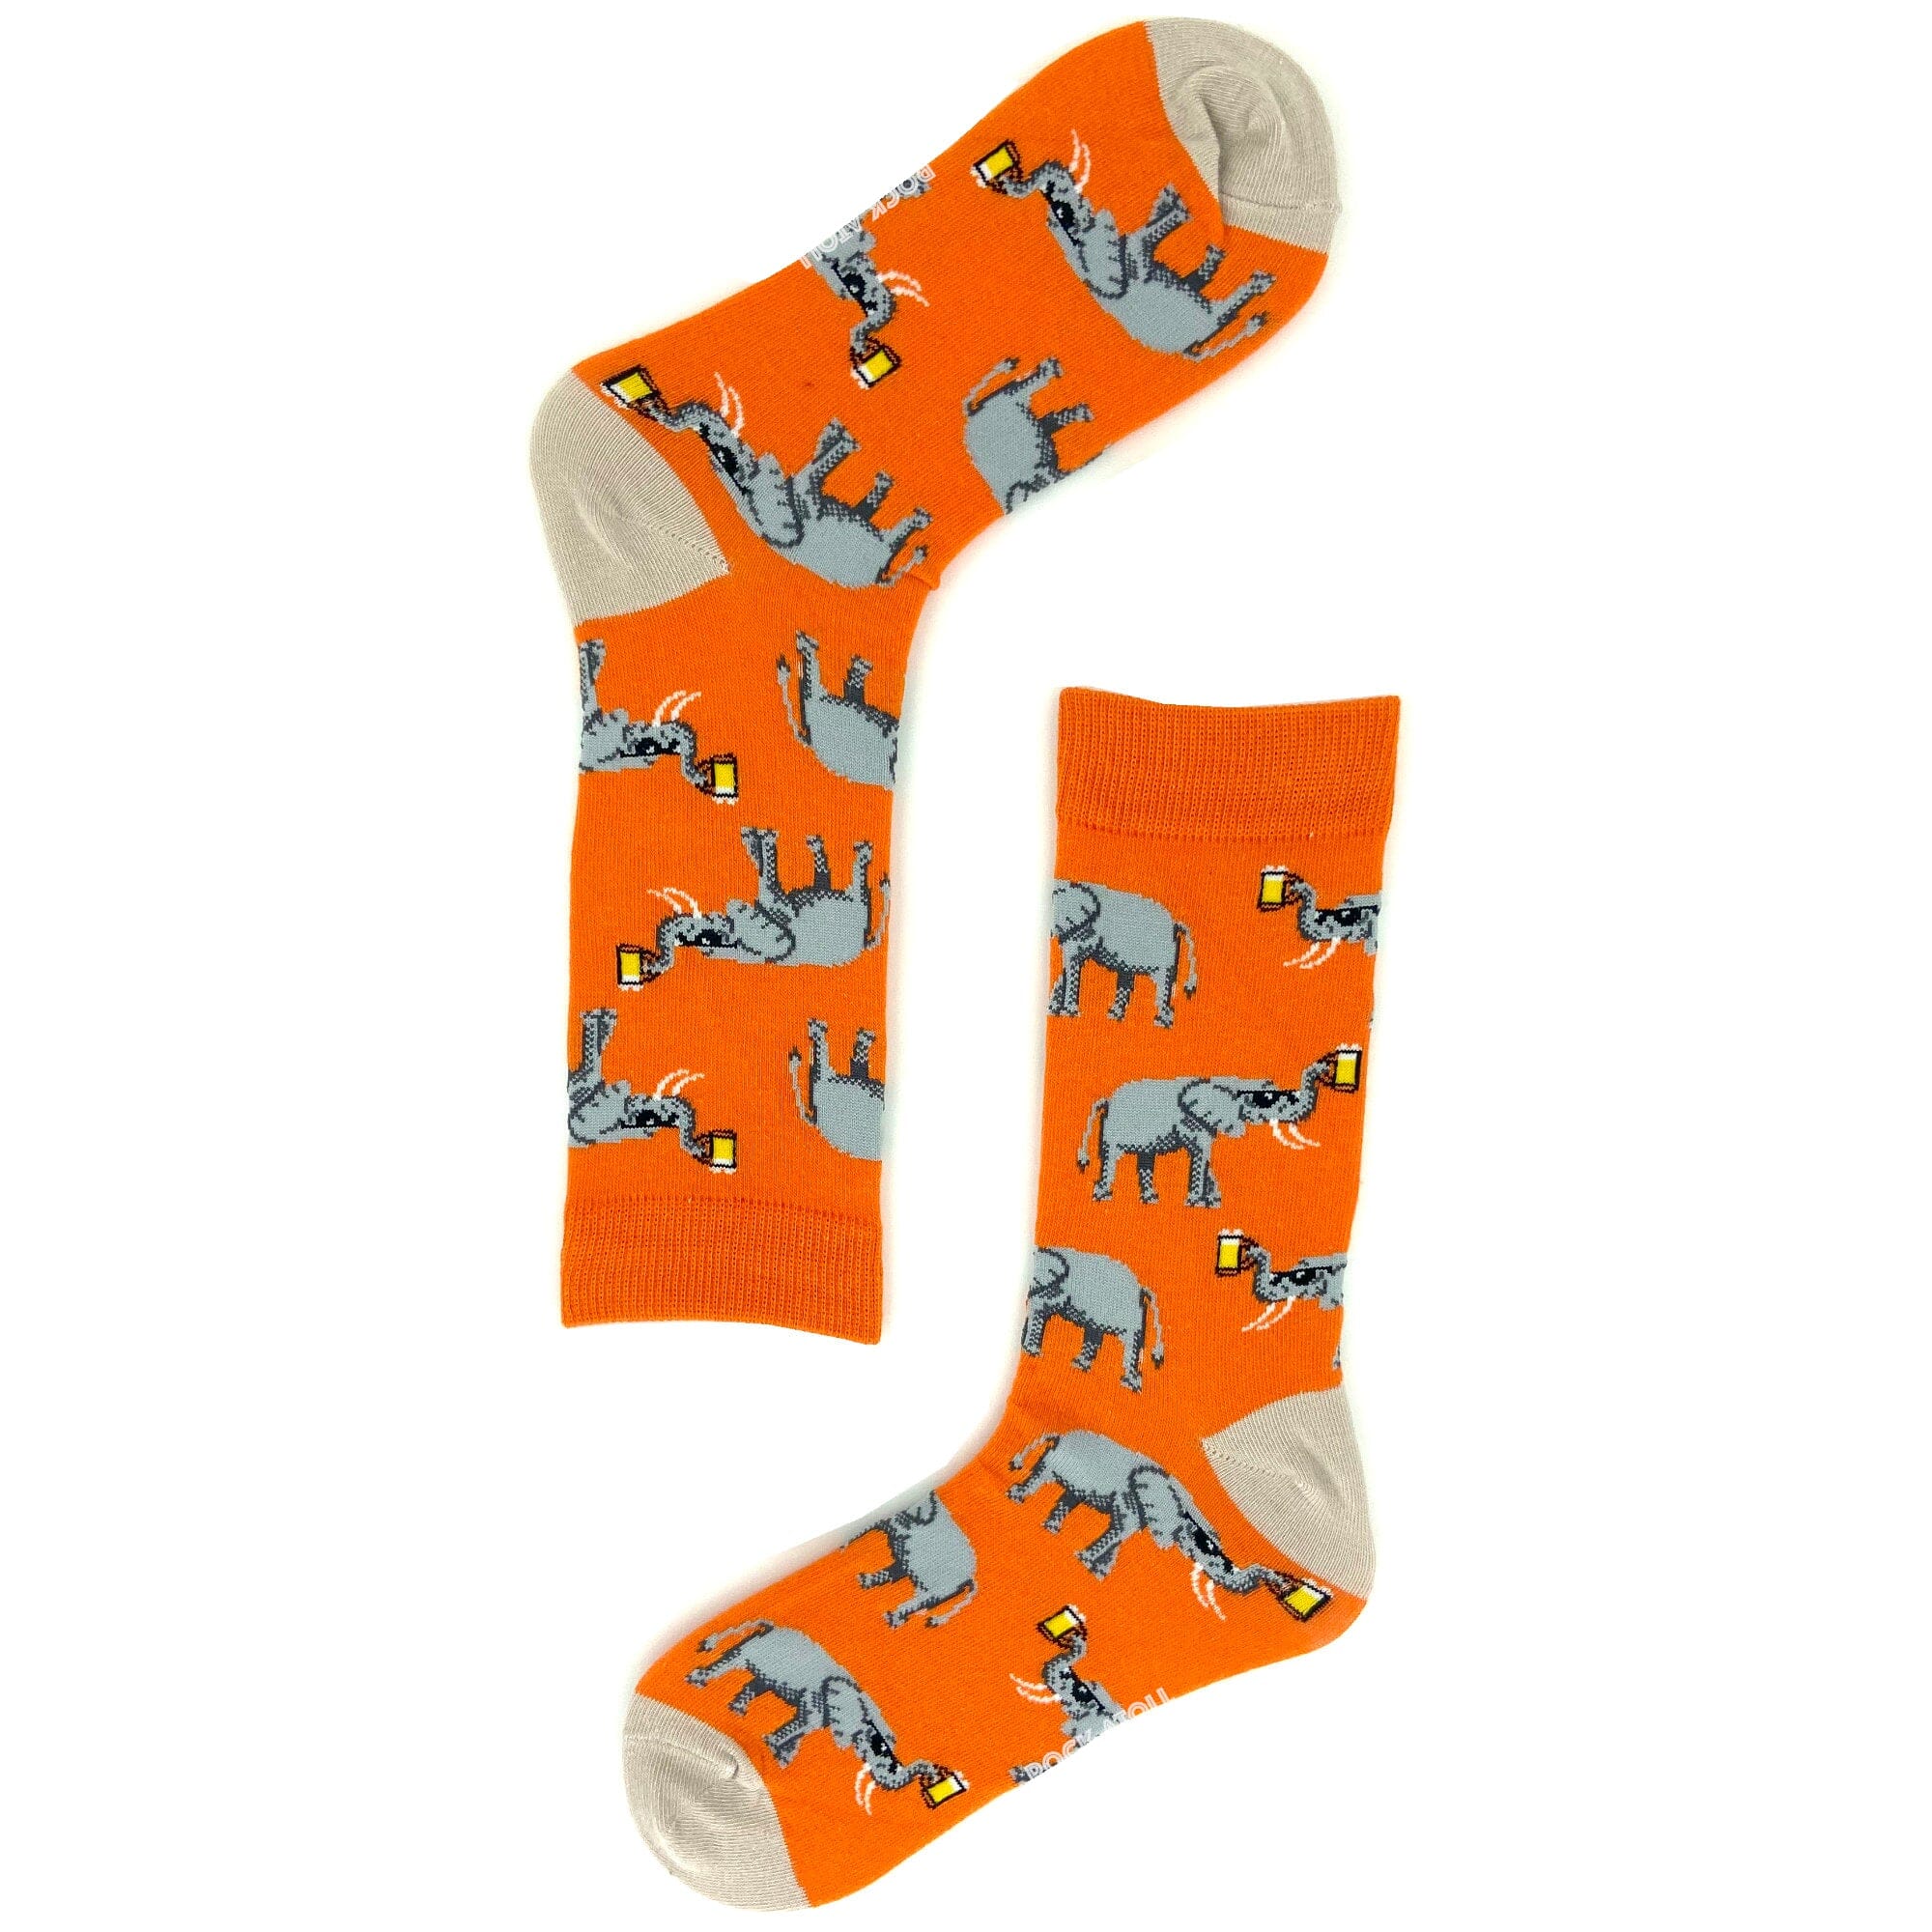 Bright Orange Fun Elephants Drinking Beer Patterned Novelty Crew Socks